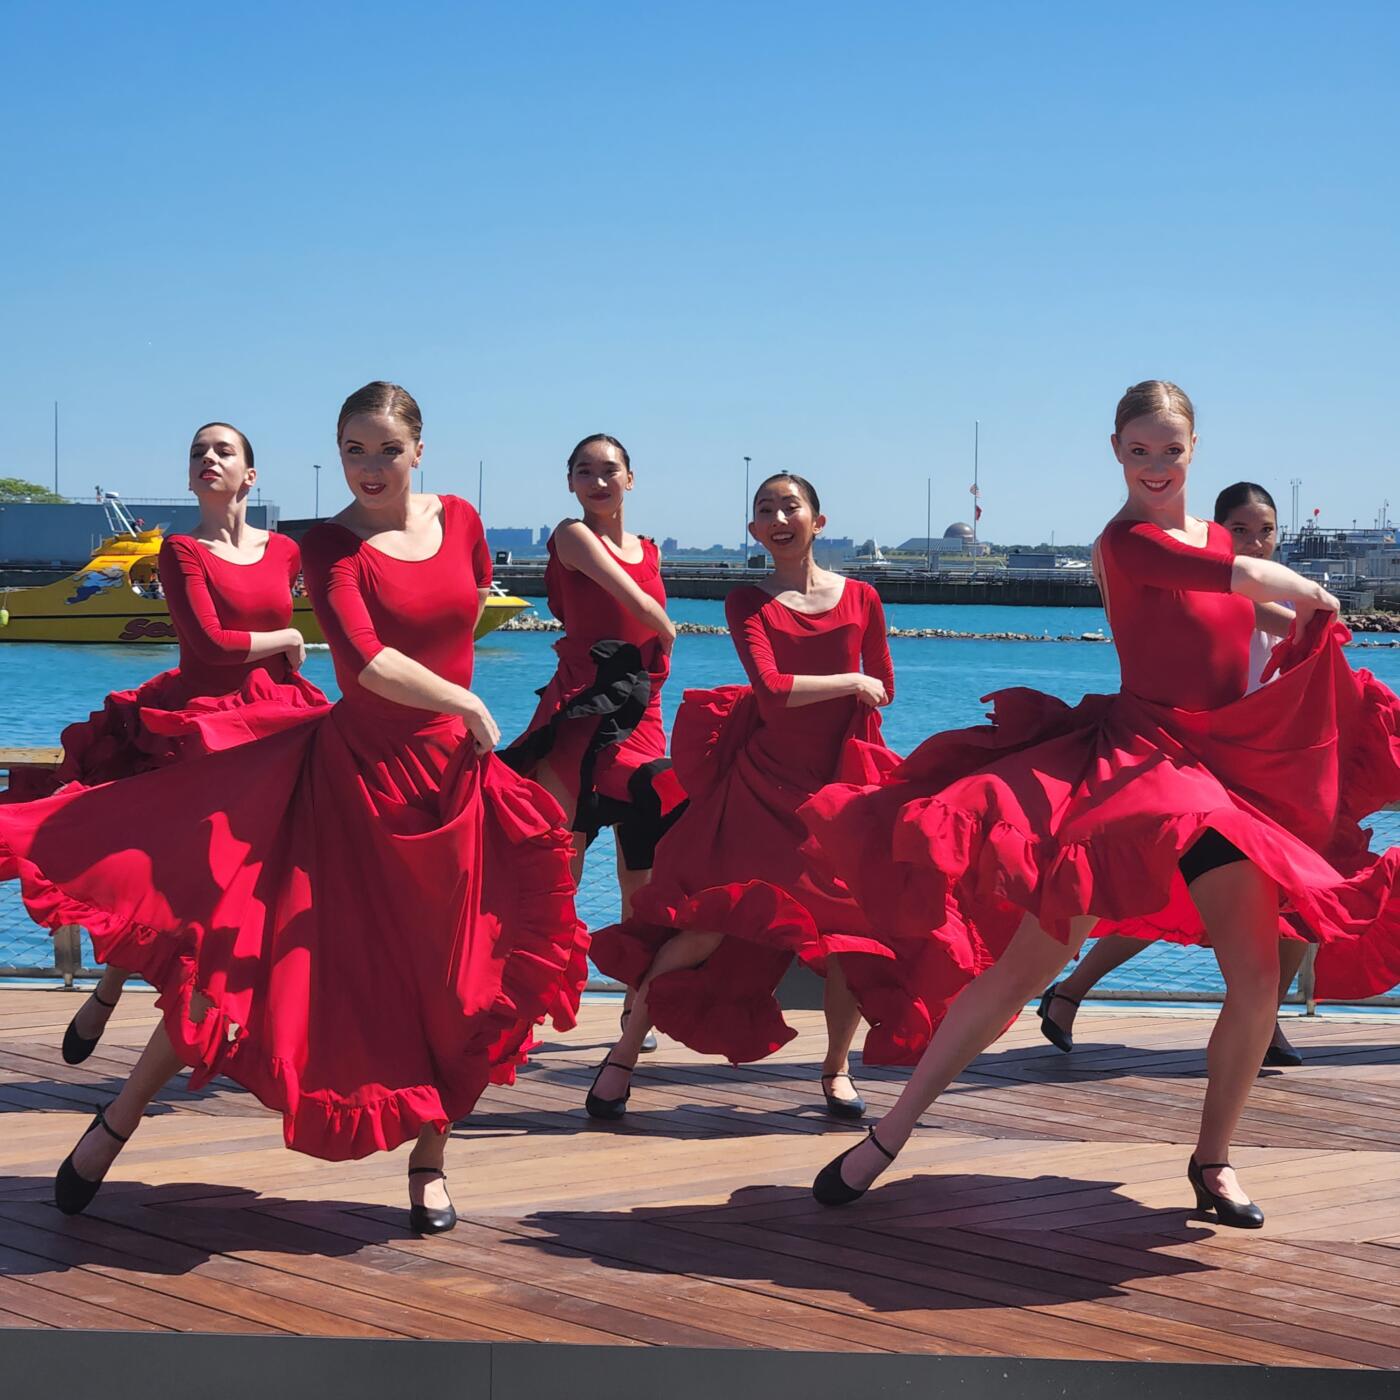 Girls Wearing Red Dancing at Pier Dance at Navy Pier